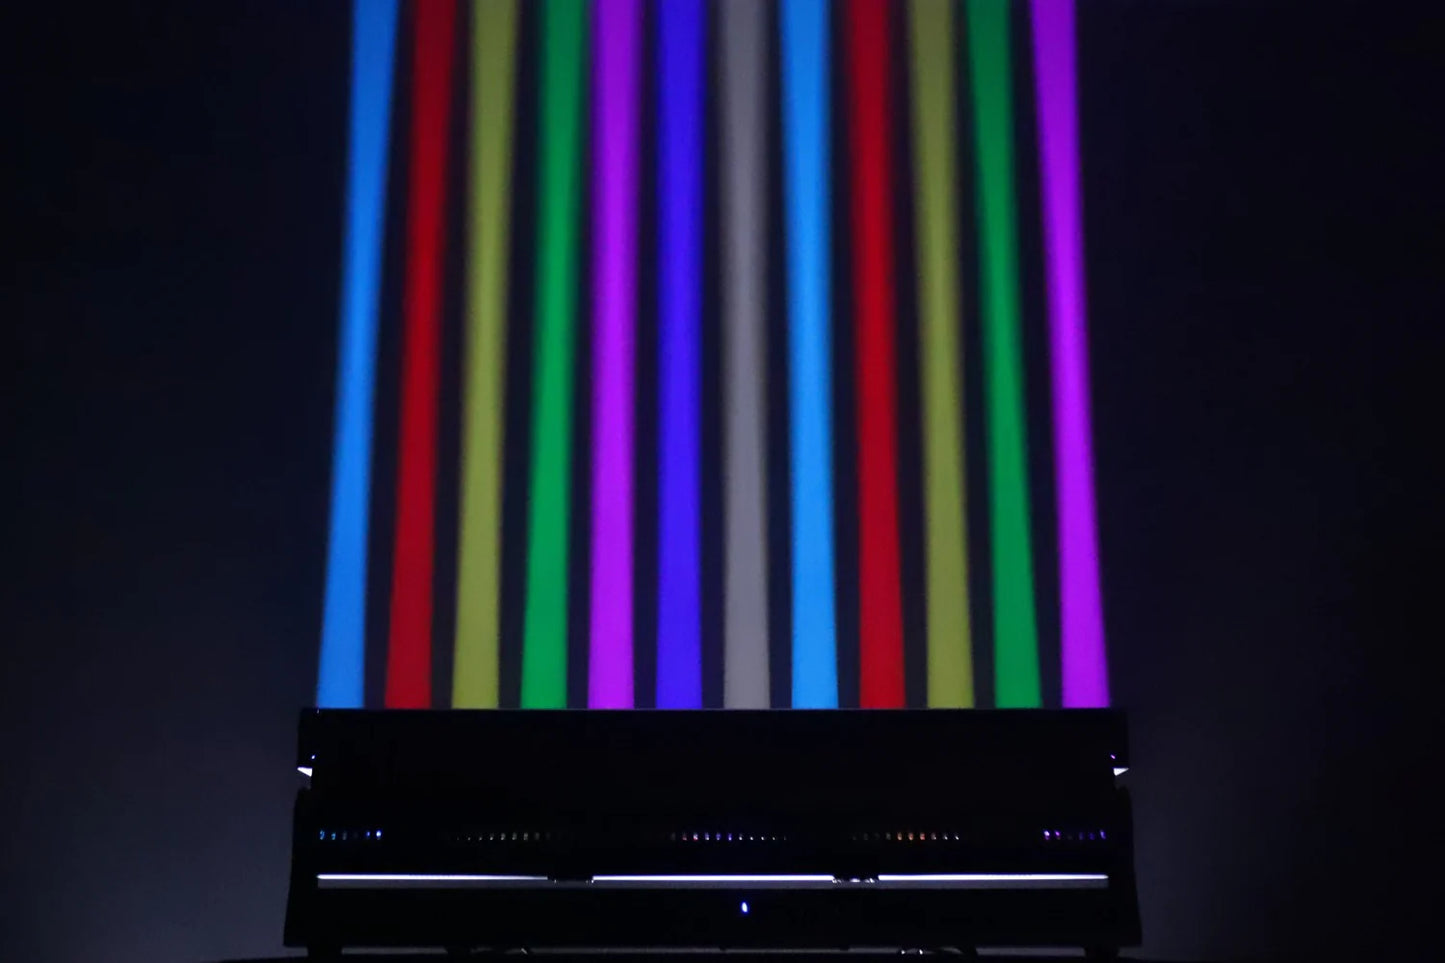 EVENT LIGHTING  SURF12X60 - Tilt bar with zoom 12 x 60W RGBW LEDs